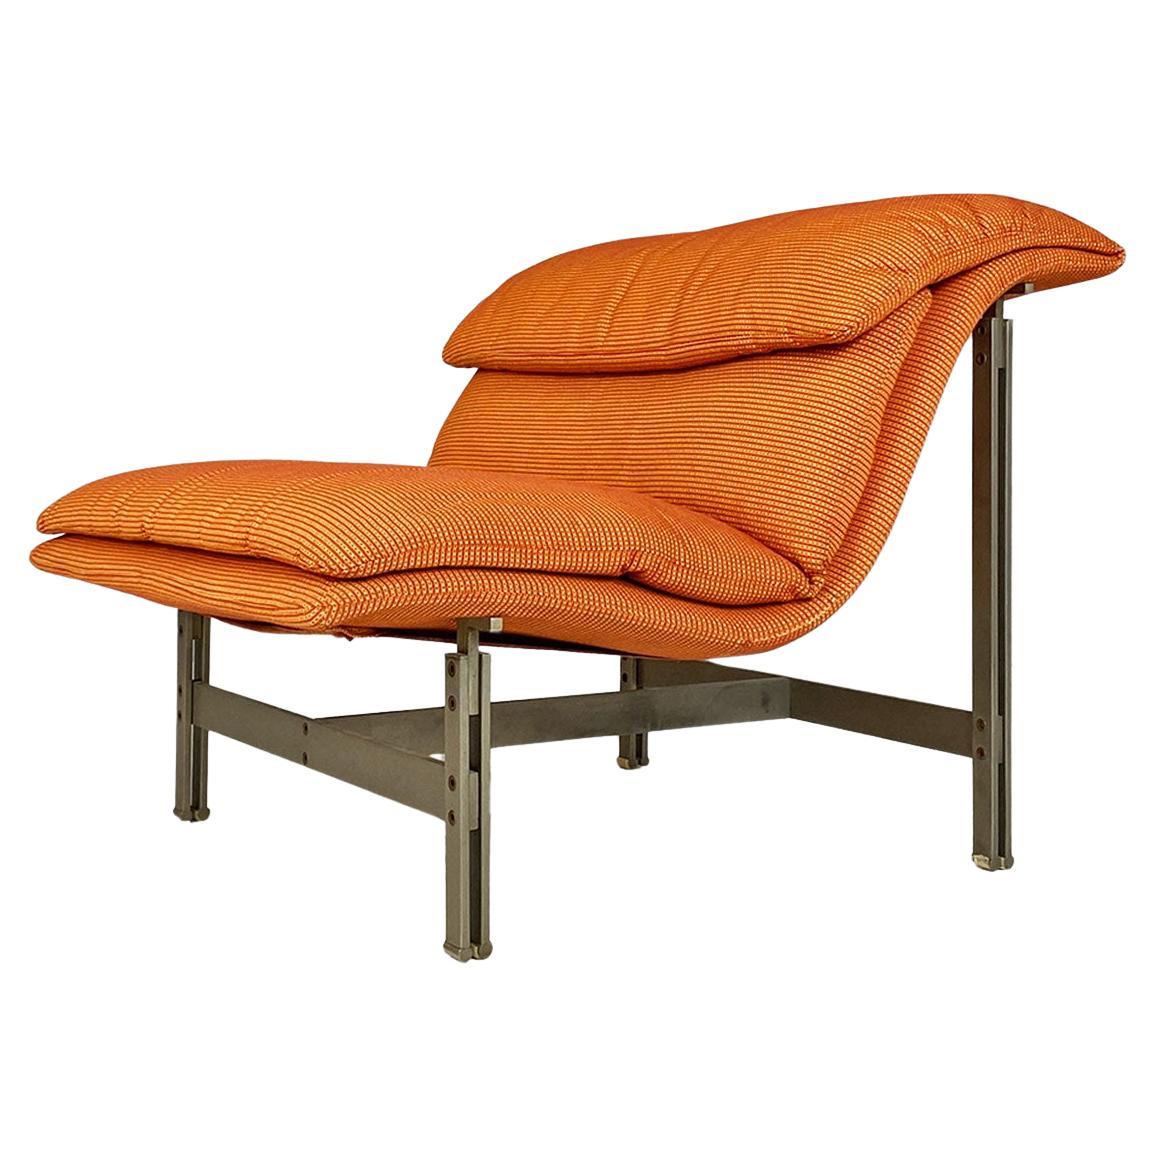 Italian modern steel and fabric Wave armchair by Giovanni Offredi, Saporiti 1974